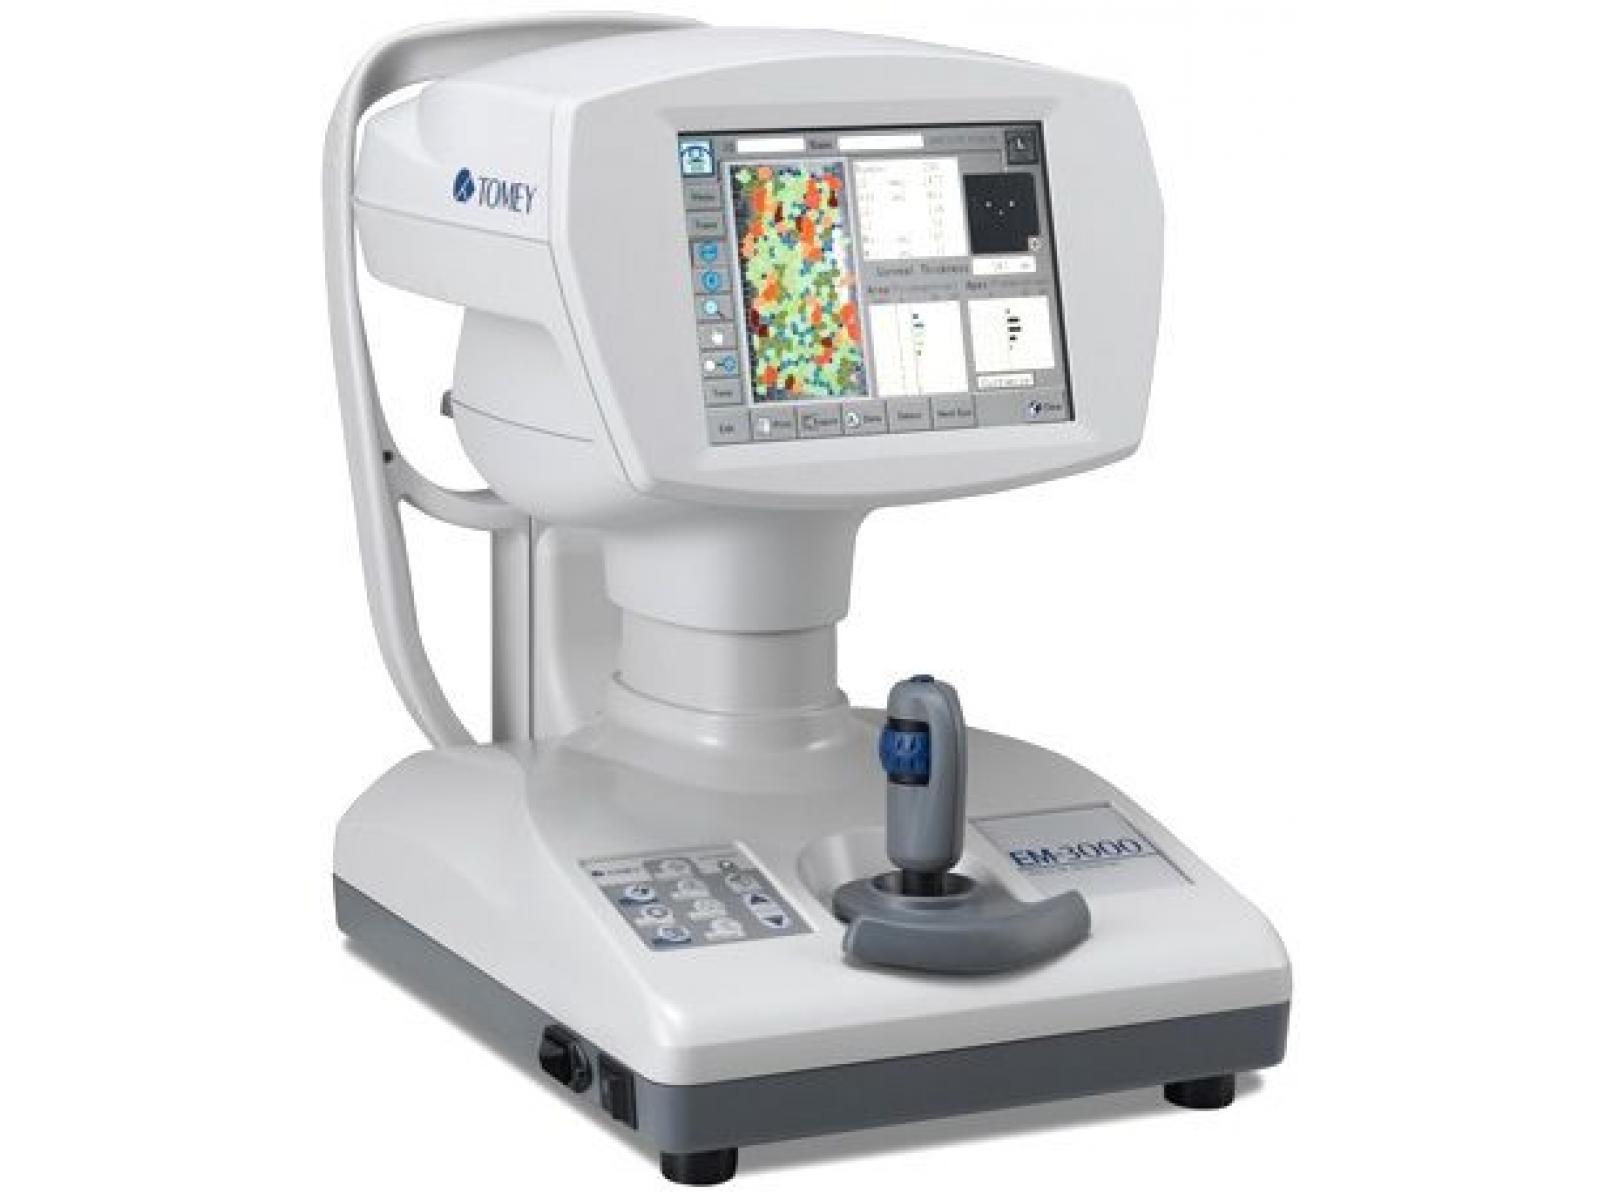 Irene optik-centru de diagnostic oftalmologic - microscop_specular_non_contact.jpg